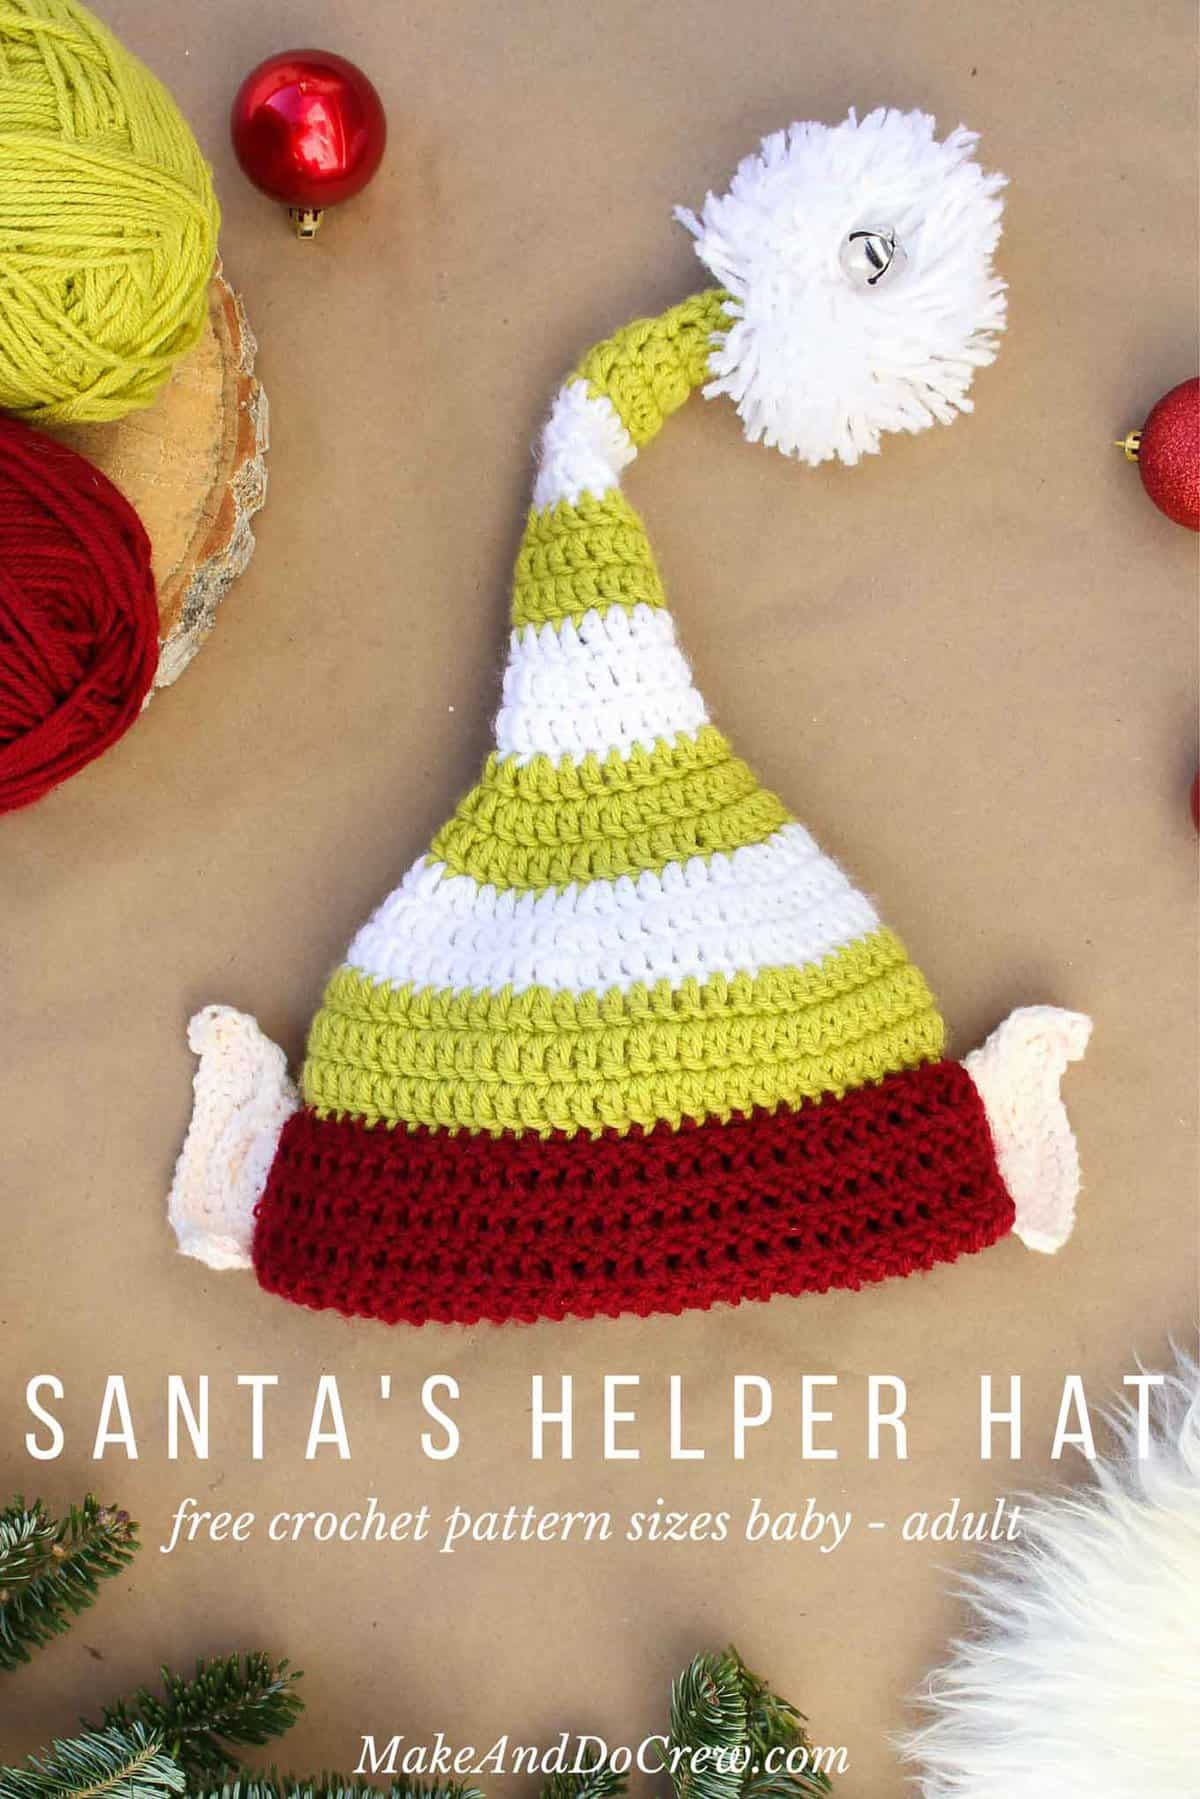 http://makeanddocrew.com/wp-content/uploads/2015/12/free-crochet-pattern-elf-hat-ears.jpg